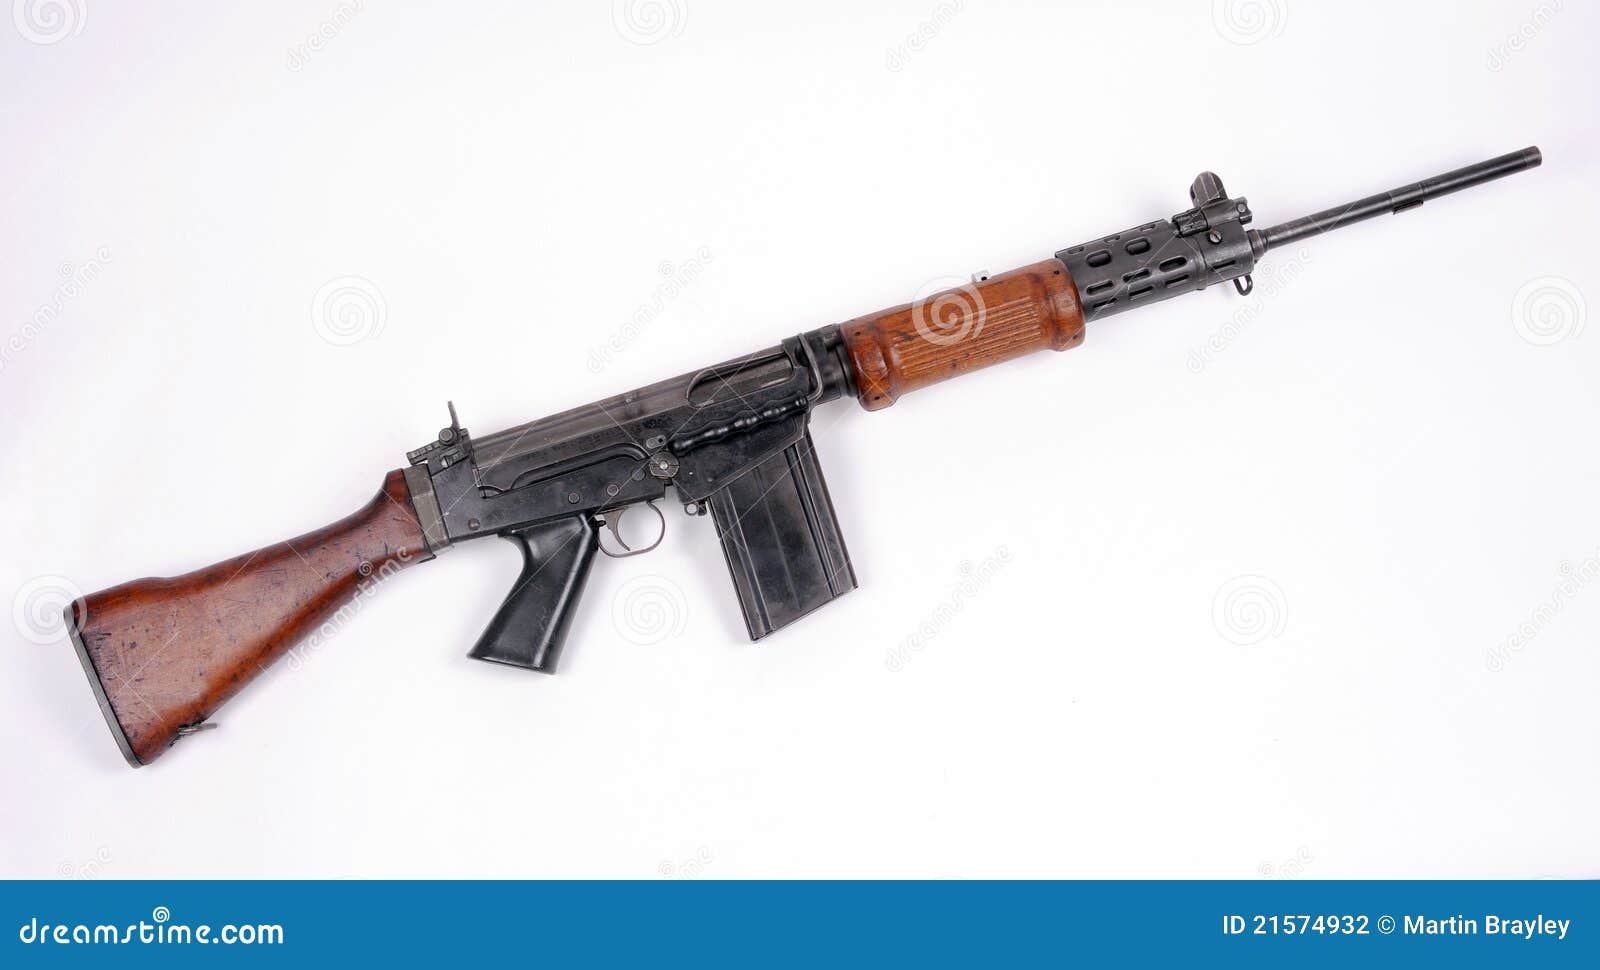 israeli-fn-fal-assault-rifle-21574932.jpg